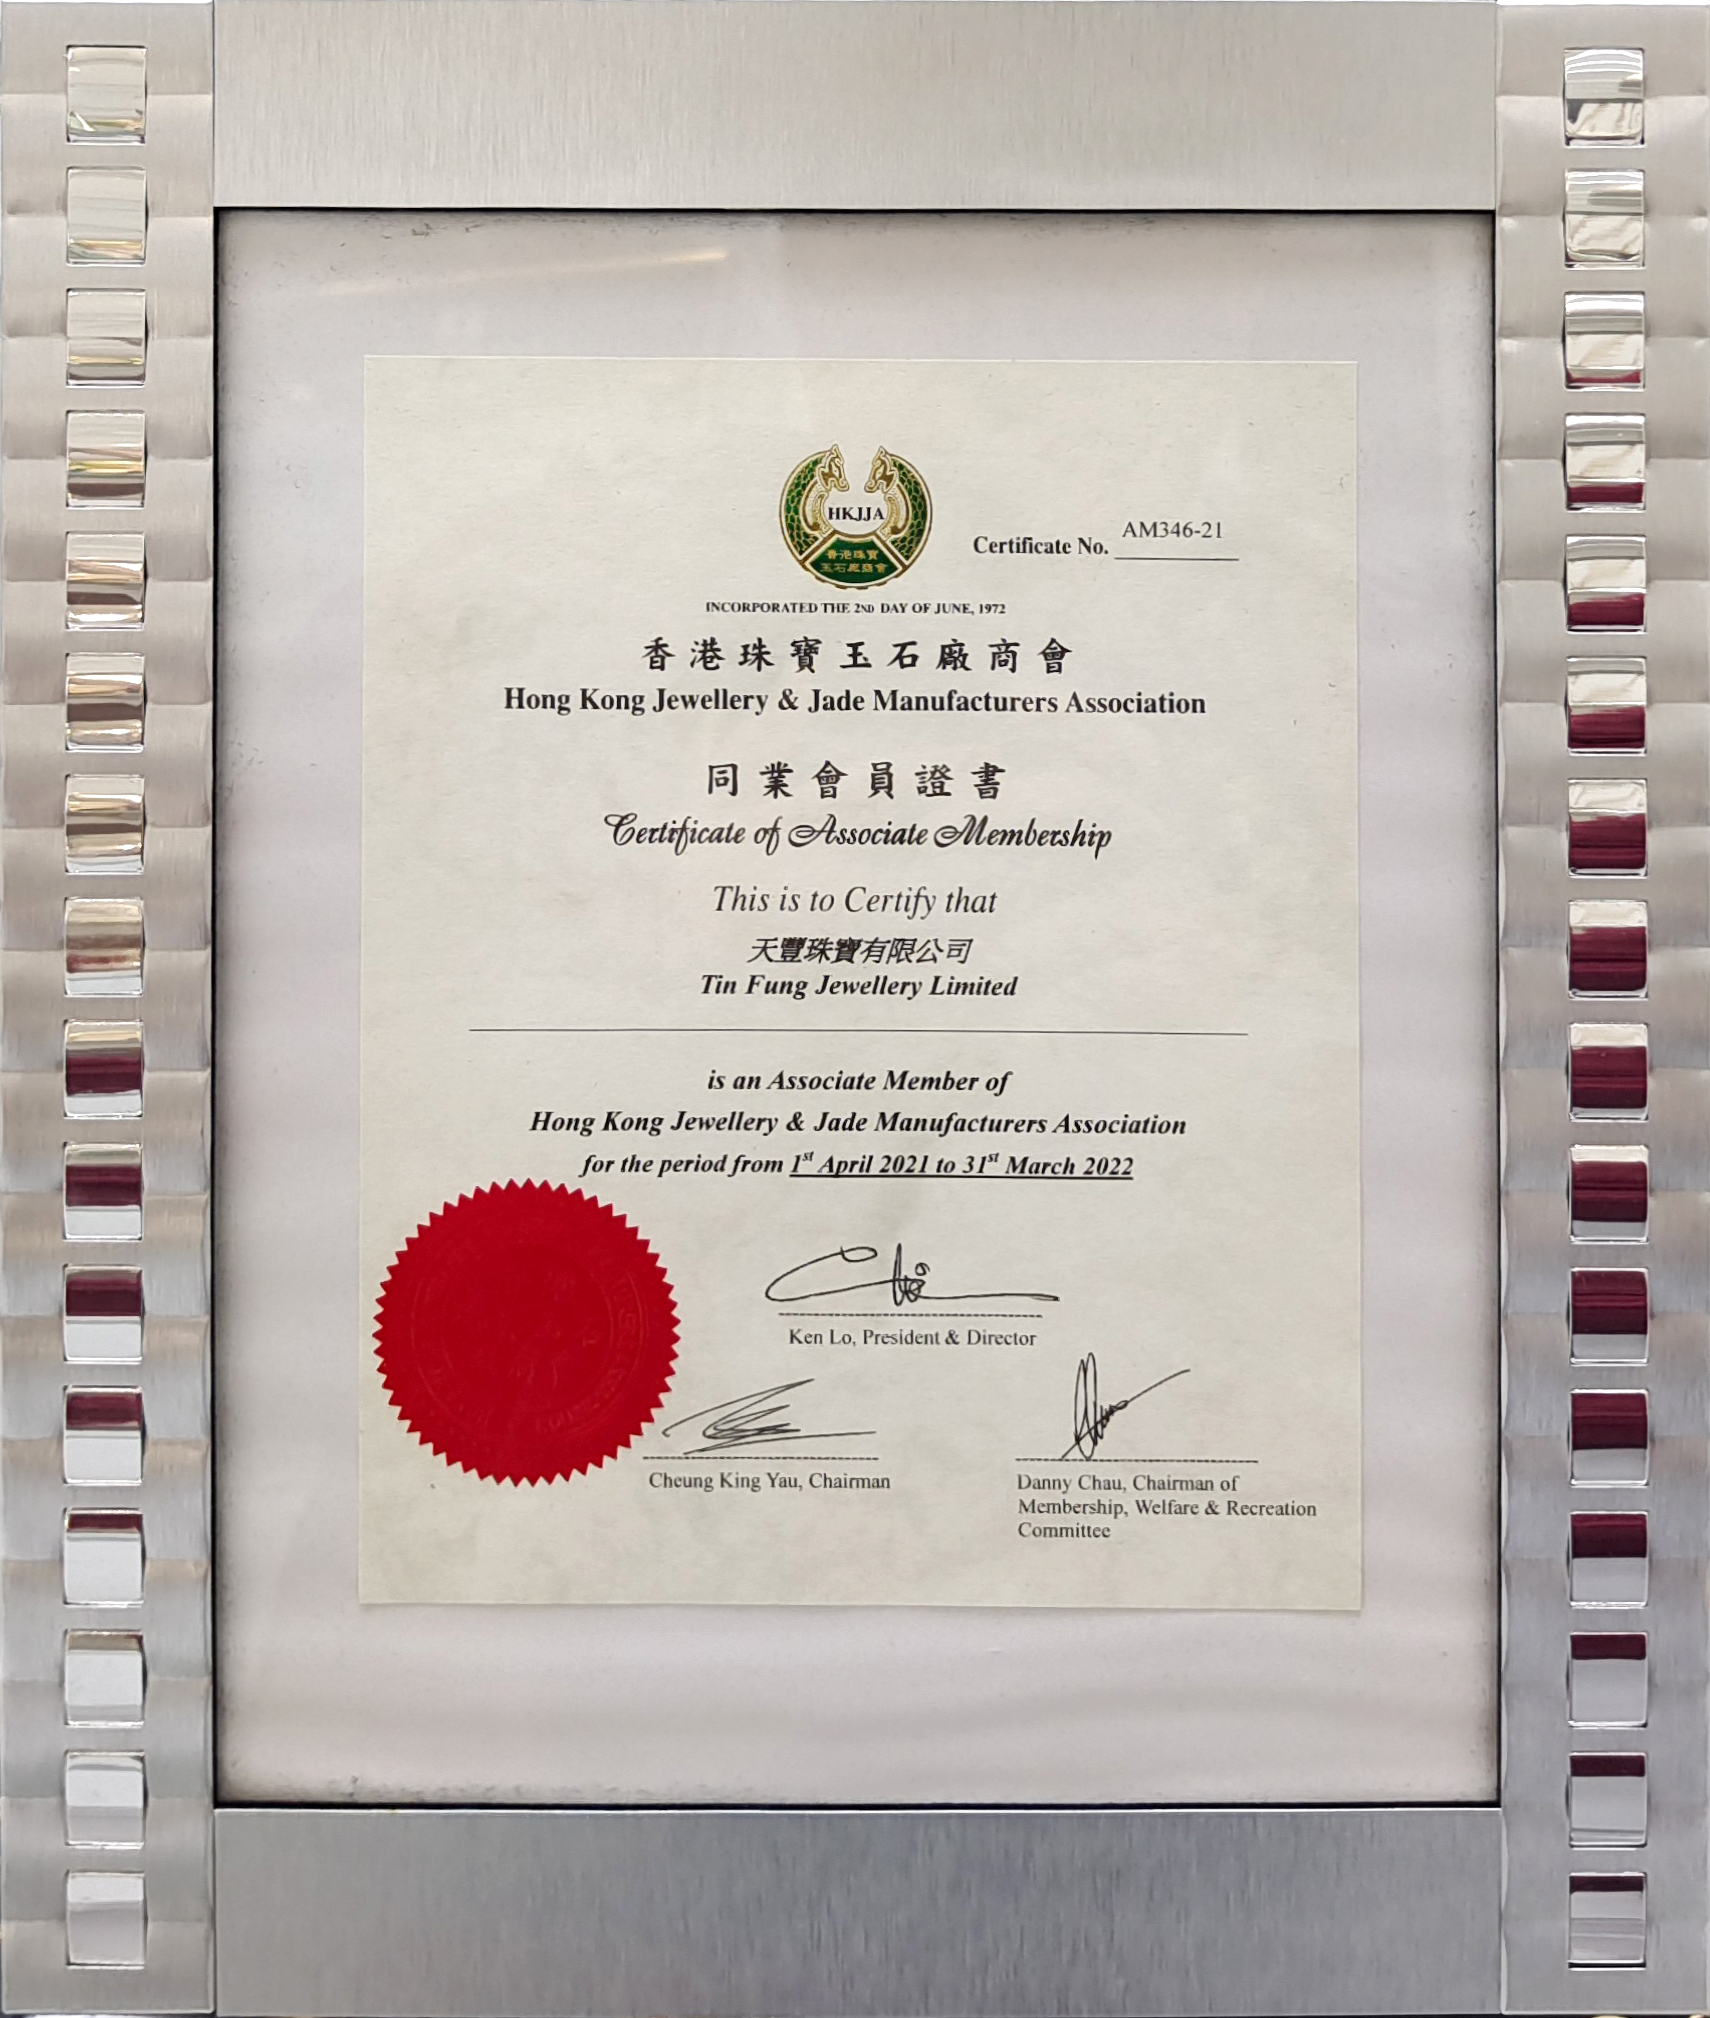 Hong Kong Jewellery & Jade Manufacturers Association Certificate of Associate Membership